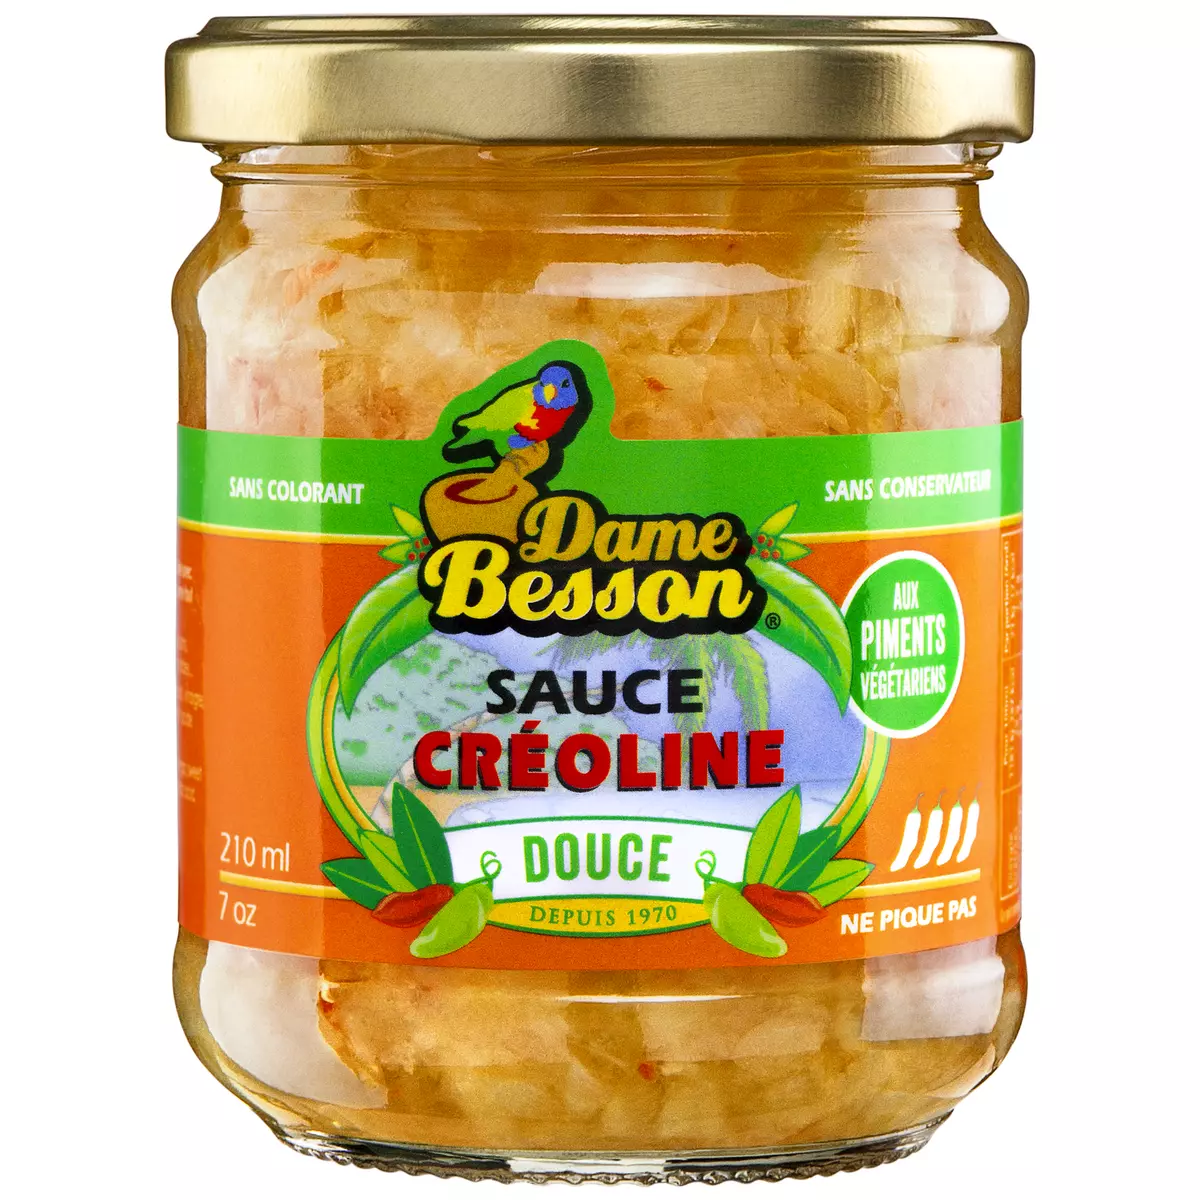 DAME BESSON Sauce créoline douce 210ml